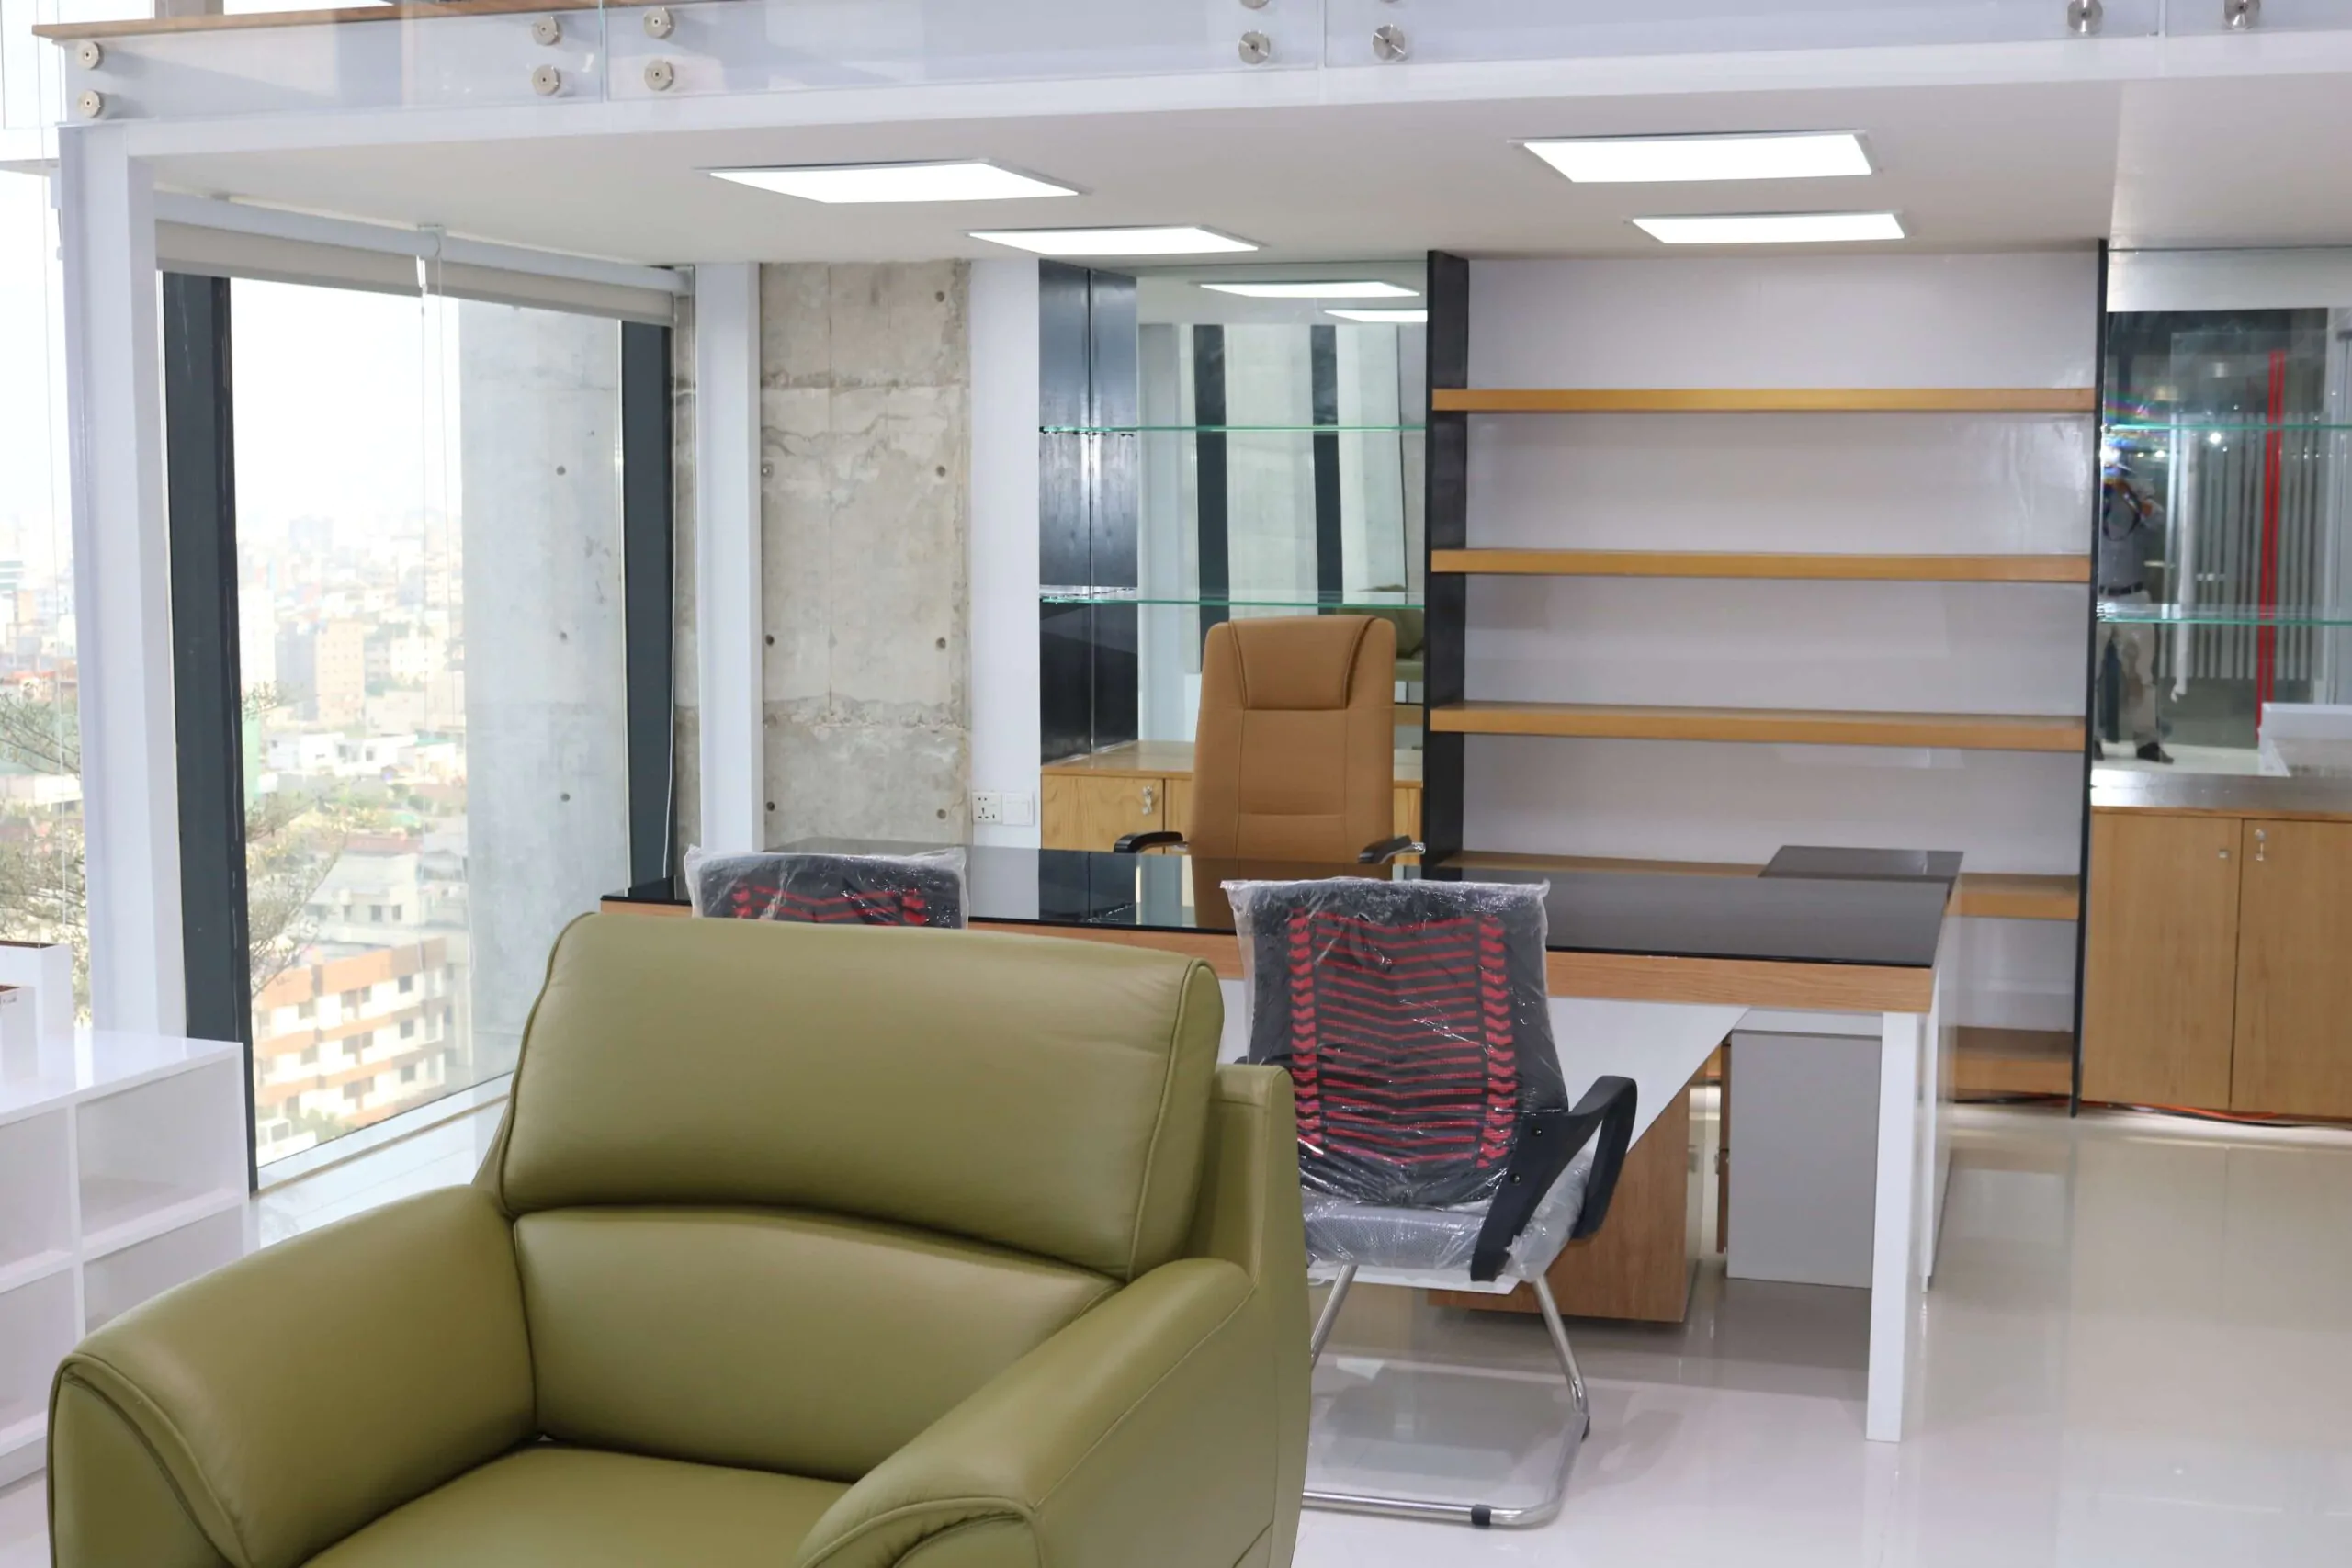 Flora Head Office Gulshan Complete Project Managing Director Room Interior Design (18)